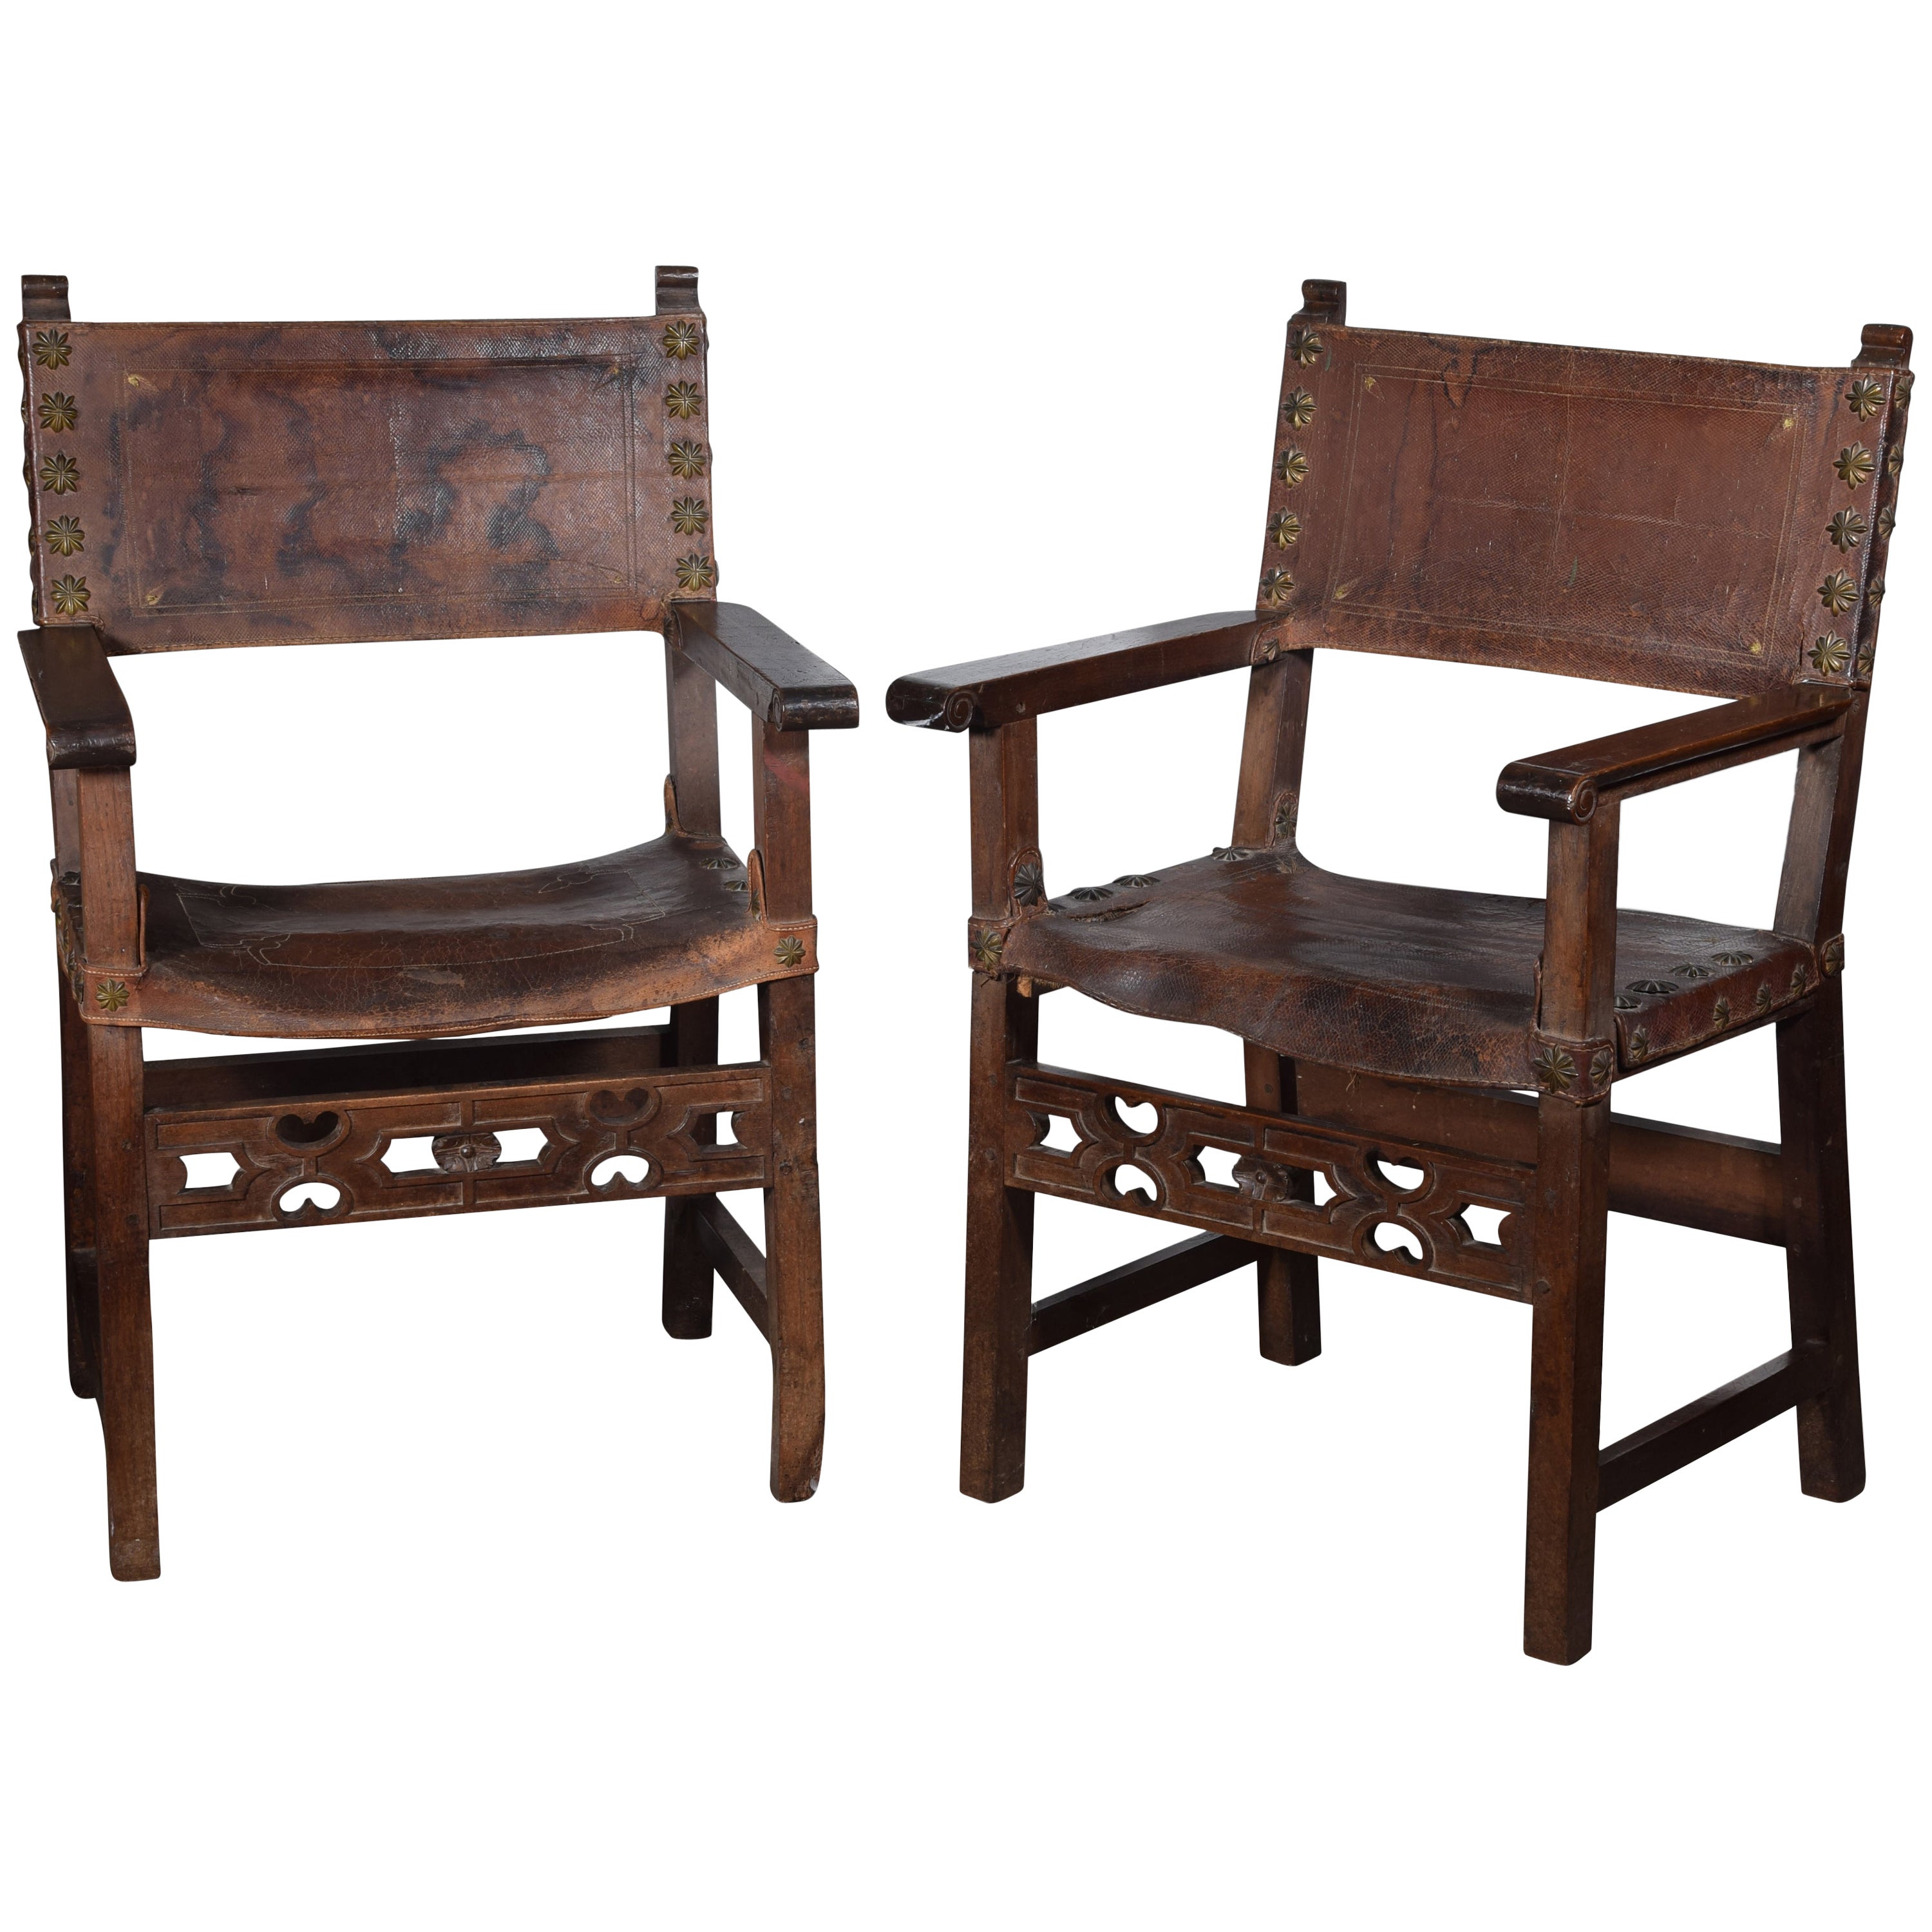 Pair of friar armchairs (frailero). Walnut, leather, etc. Spain, 17th century.  For Sale